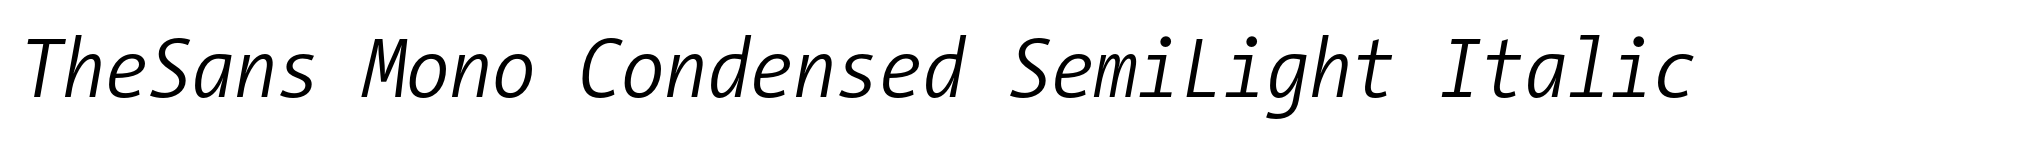 TheSans Mono Condensed SemiLight Italic image